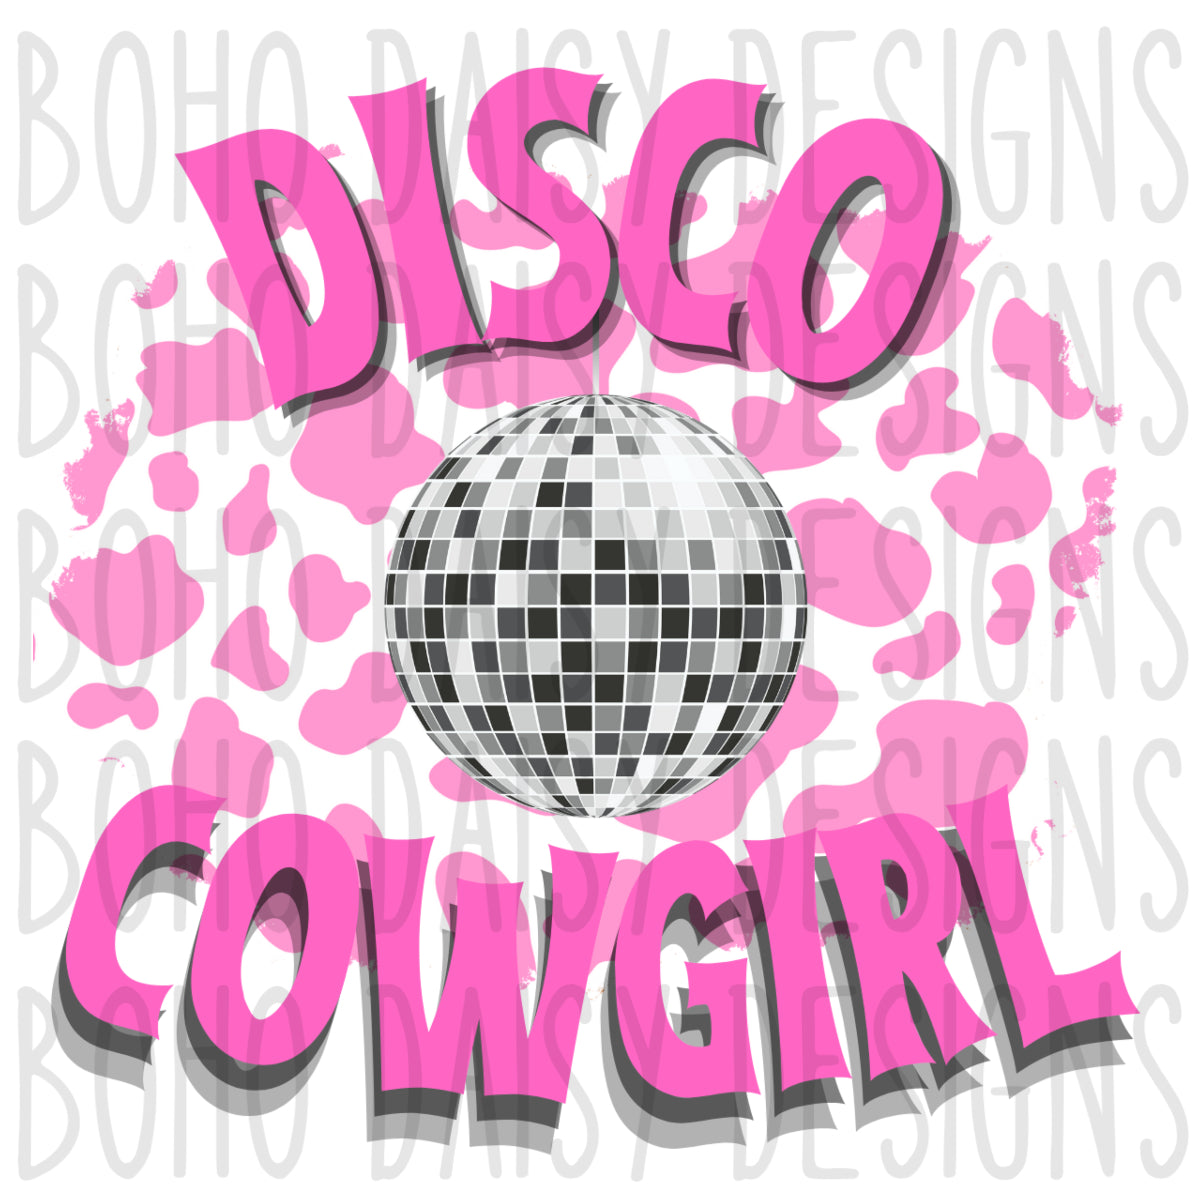 Disco Cowgirl